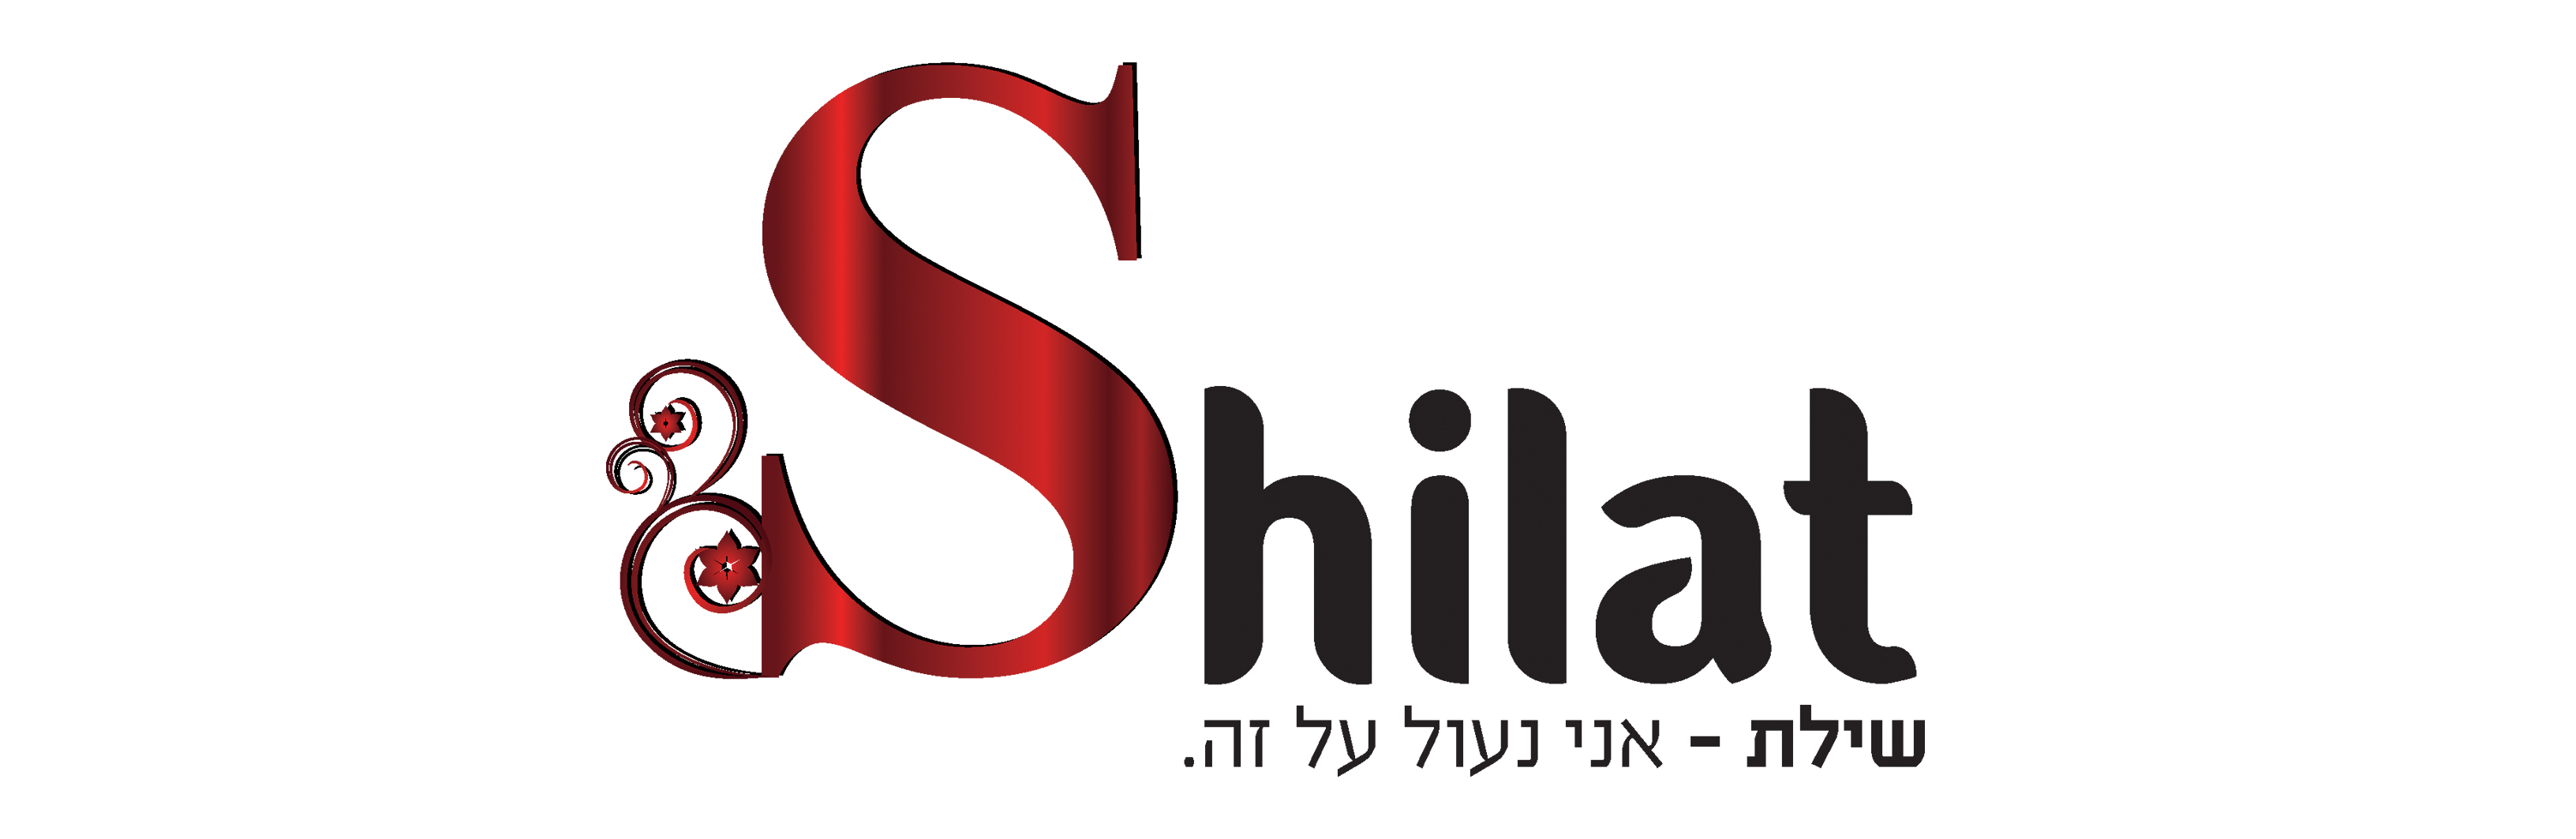 logo shilat new